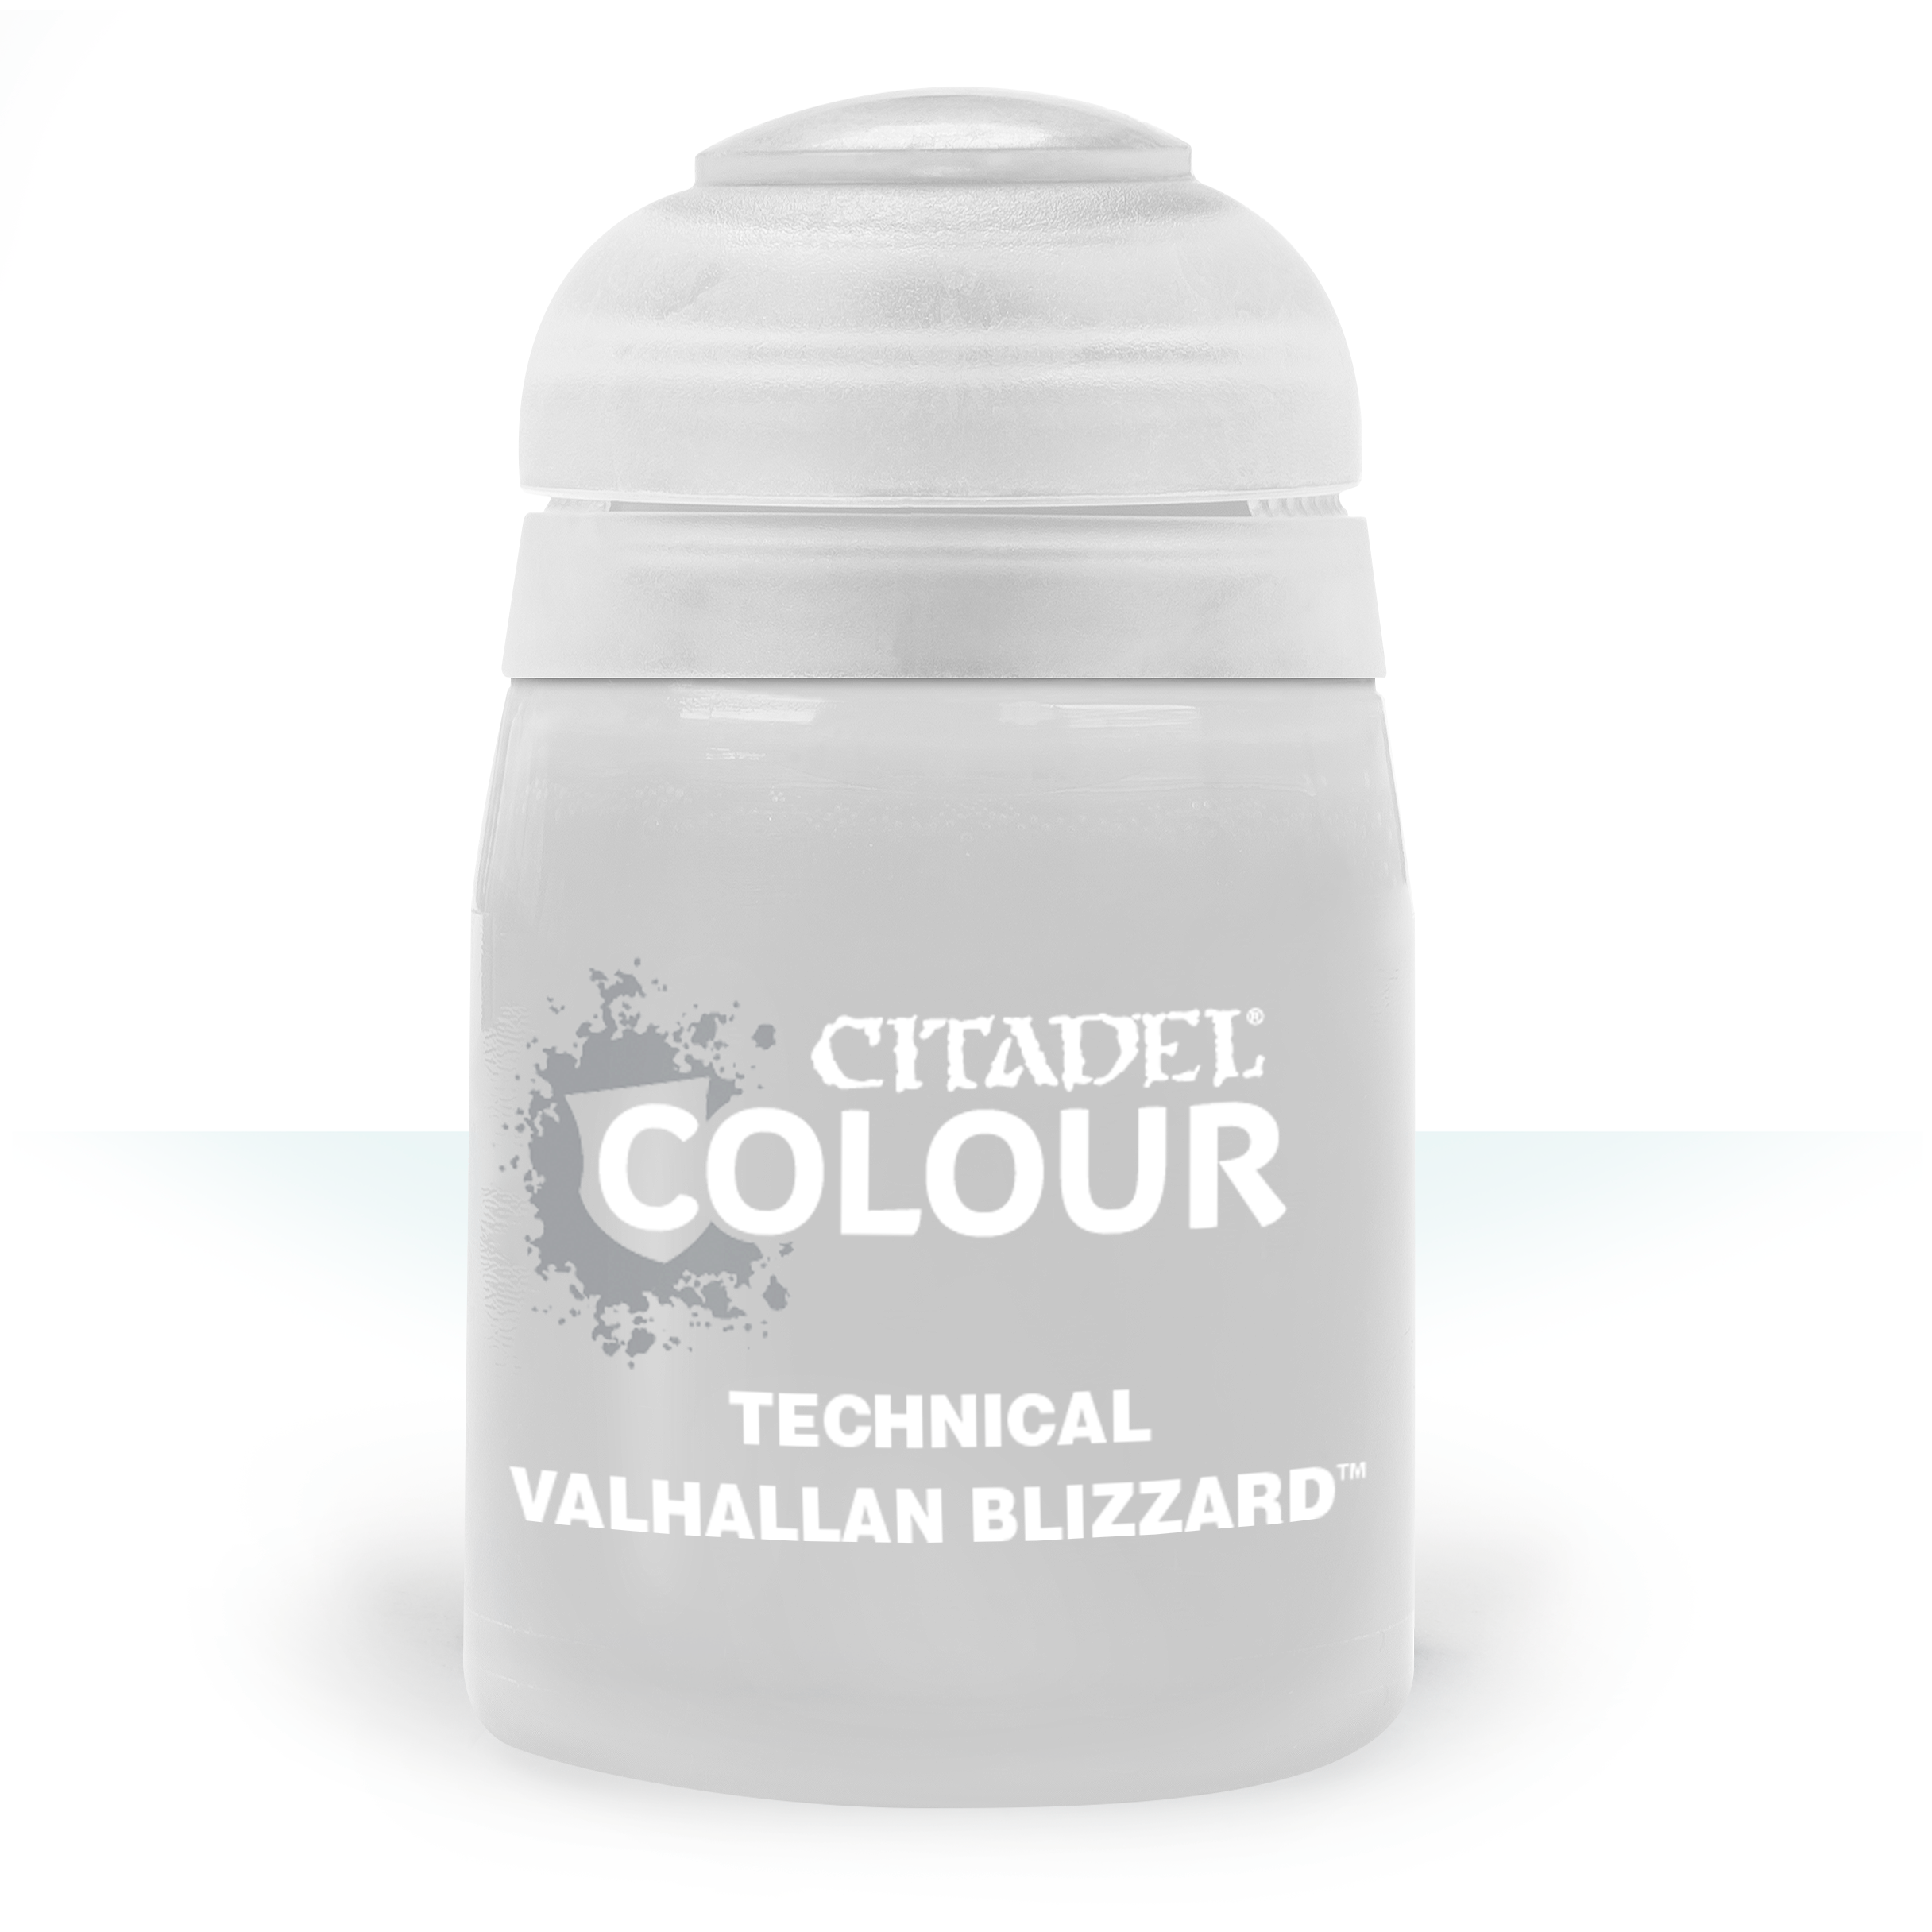 Citadel Technical Valhallan Blizzard